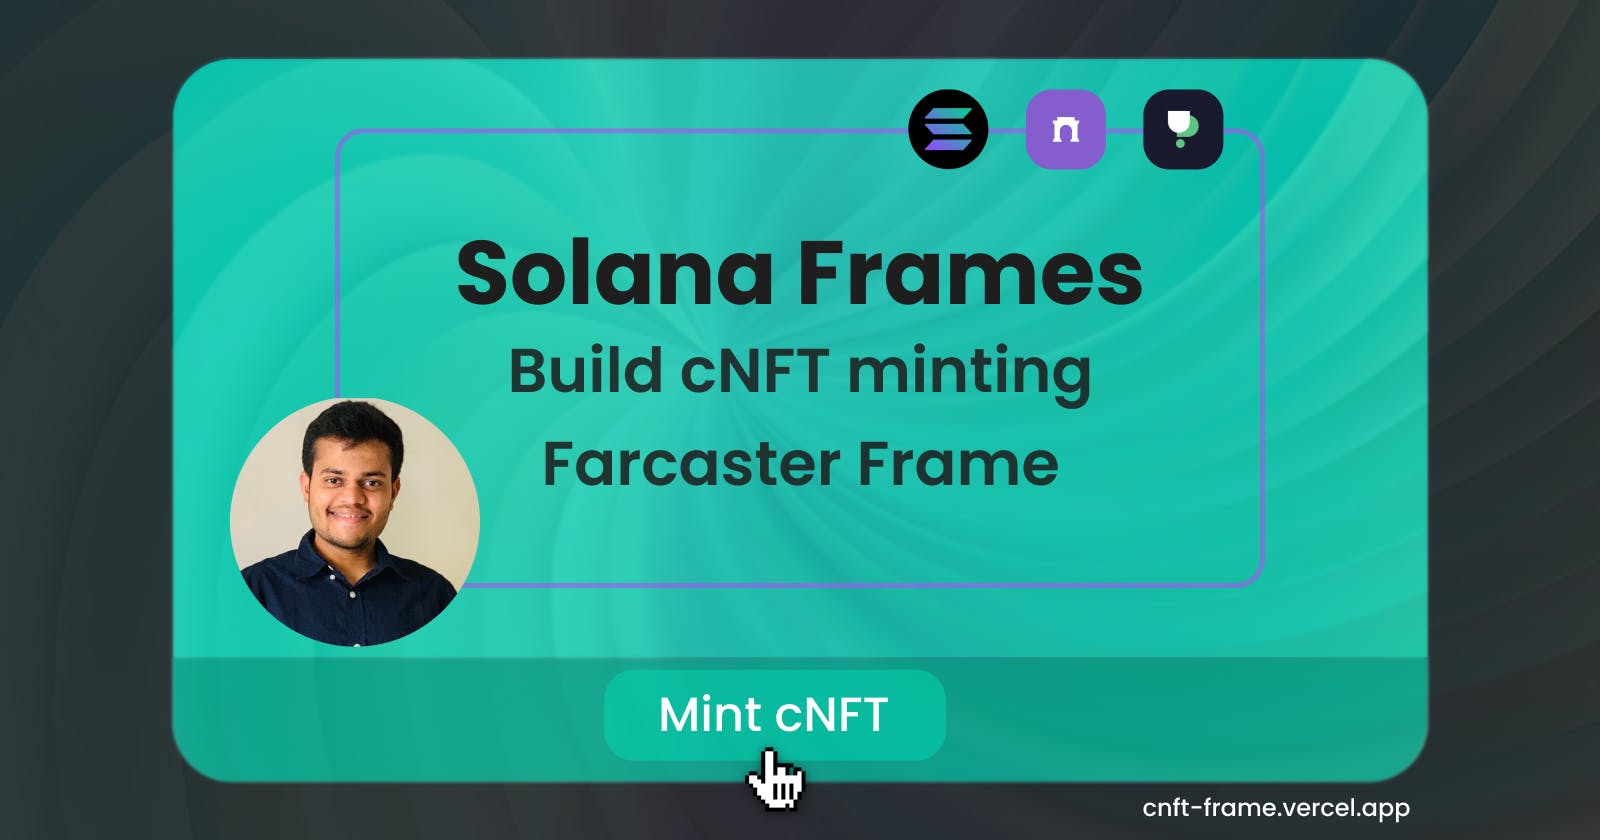 Build cNFT minting Farcaster Frame on Solana